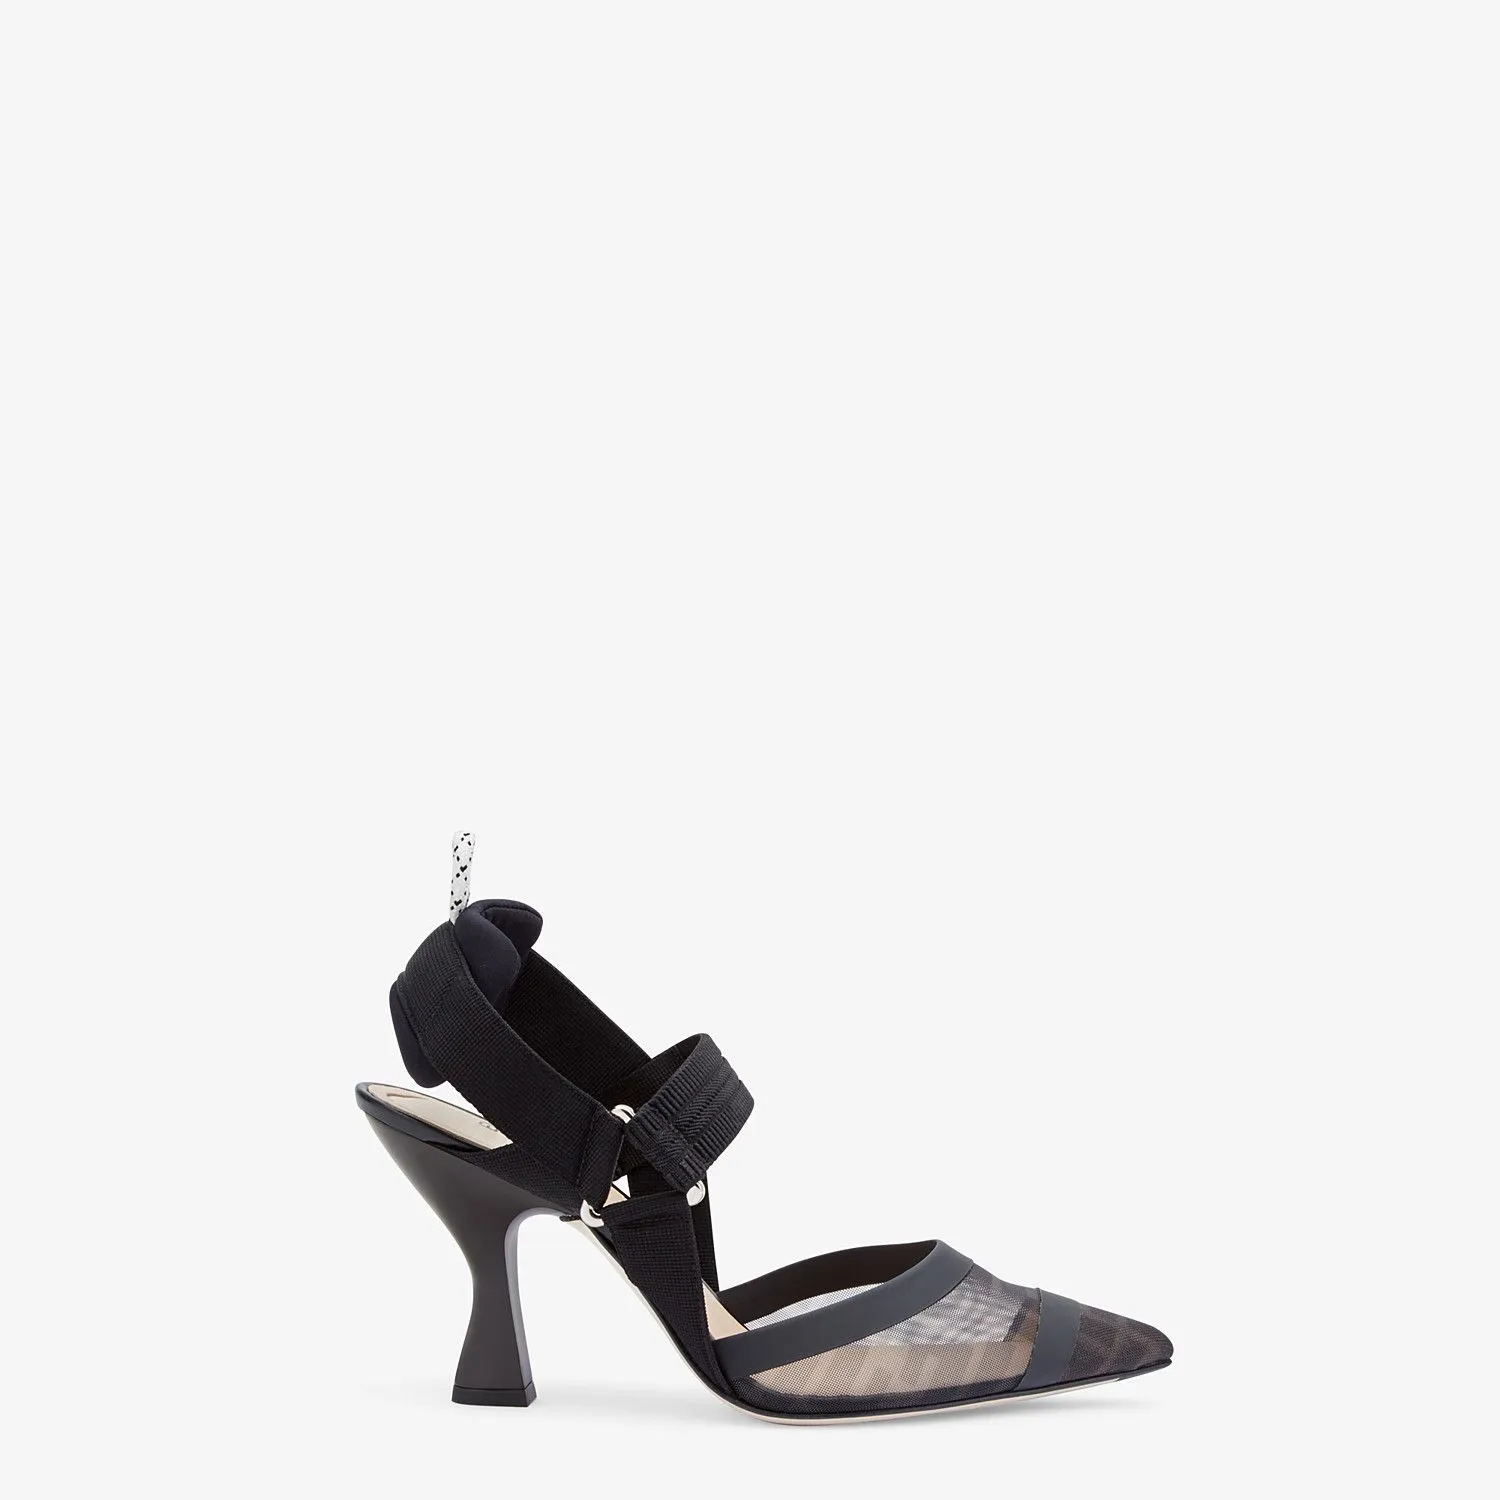 Fashion Season Shoes Roma Colibri Pumps Black Leather Tech Mesh High-heeled Slingbacks Elasticated Ribbons